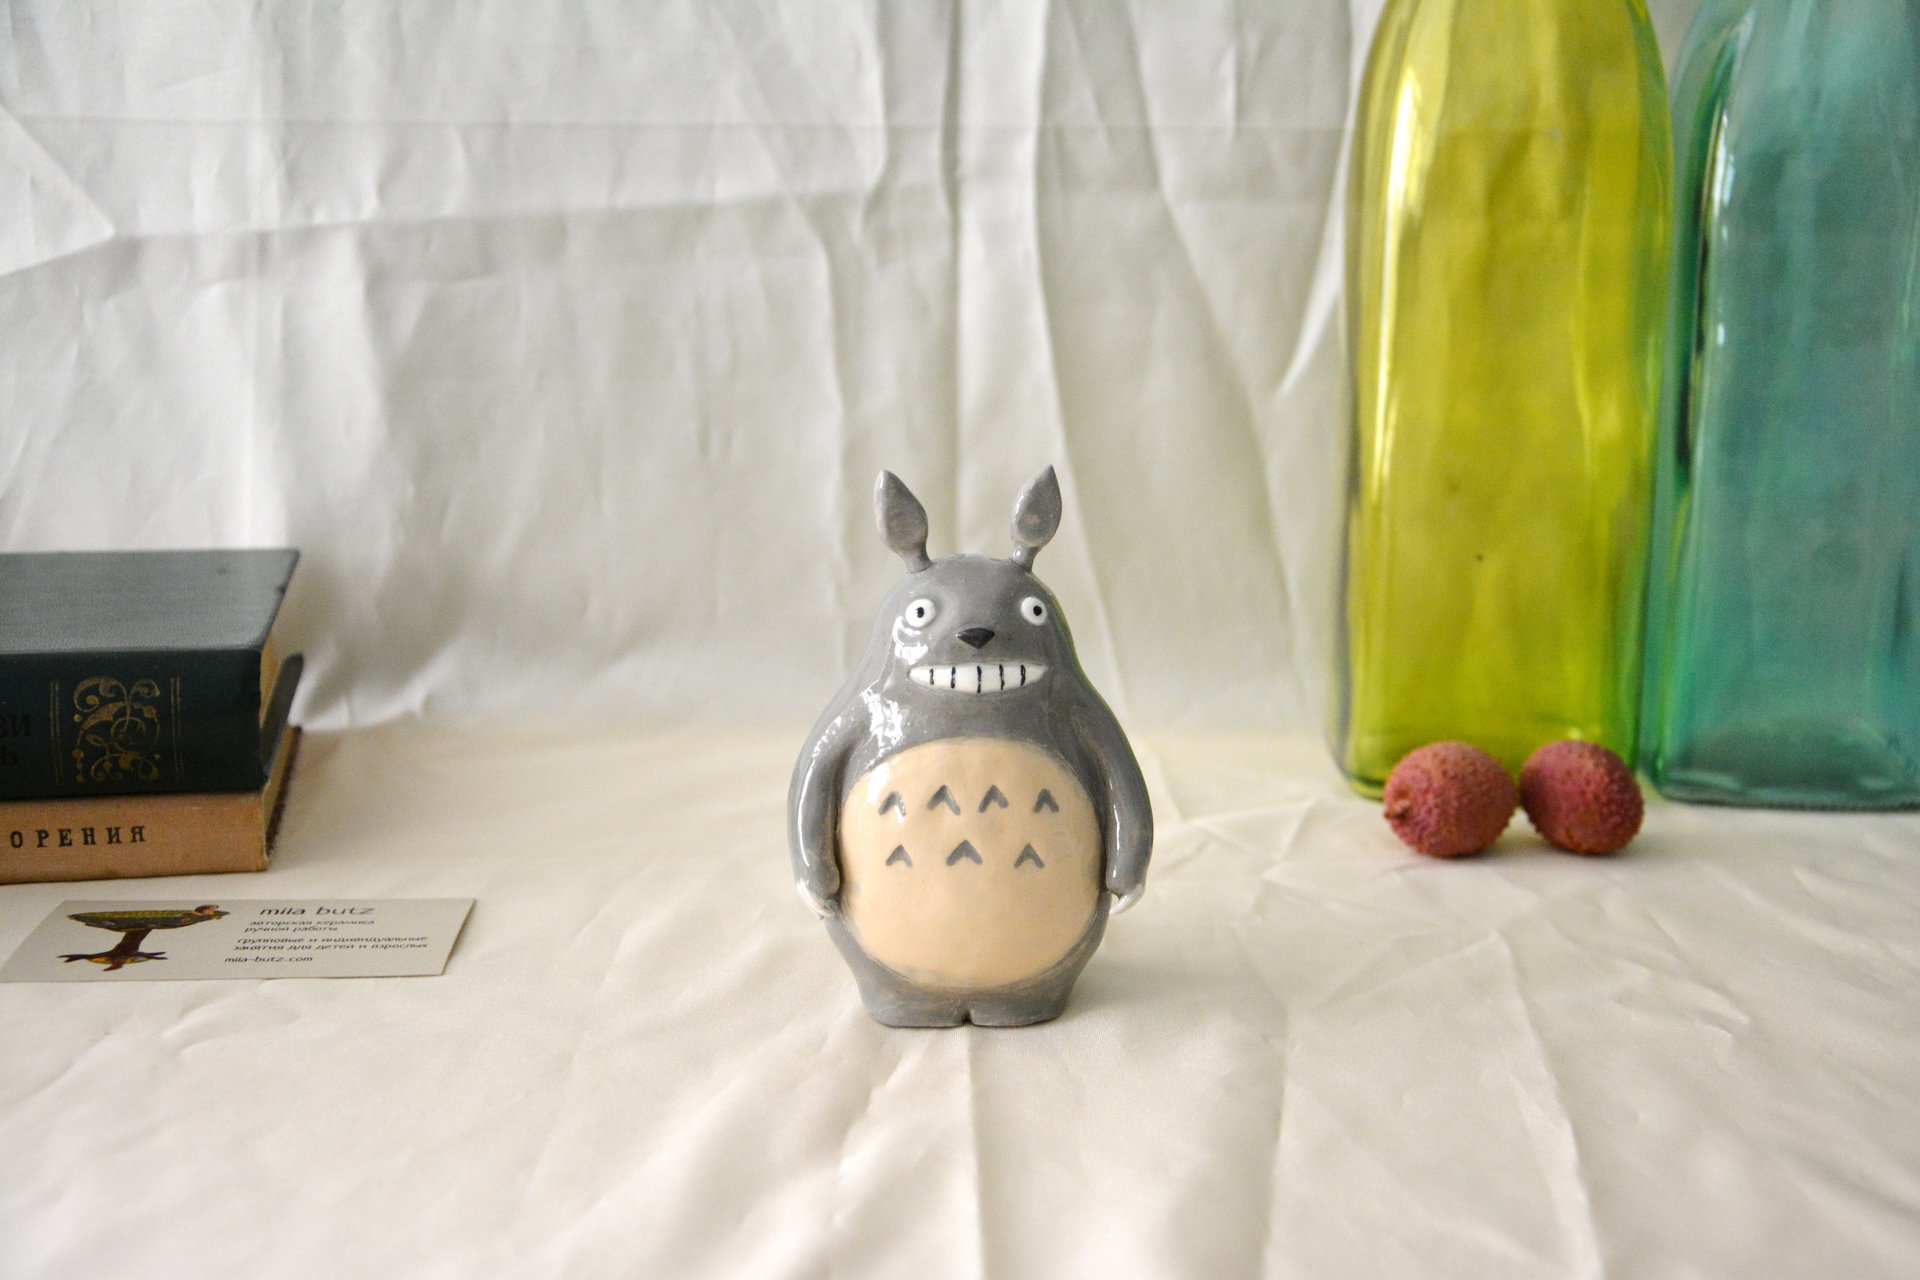 Ceramic figurine Totoro, height - 11 cm, photo 3 of 5.